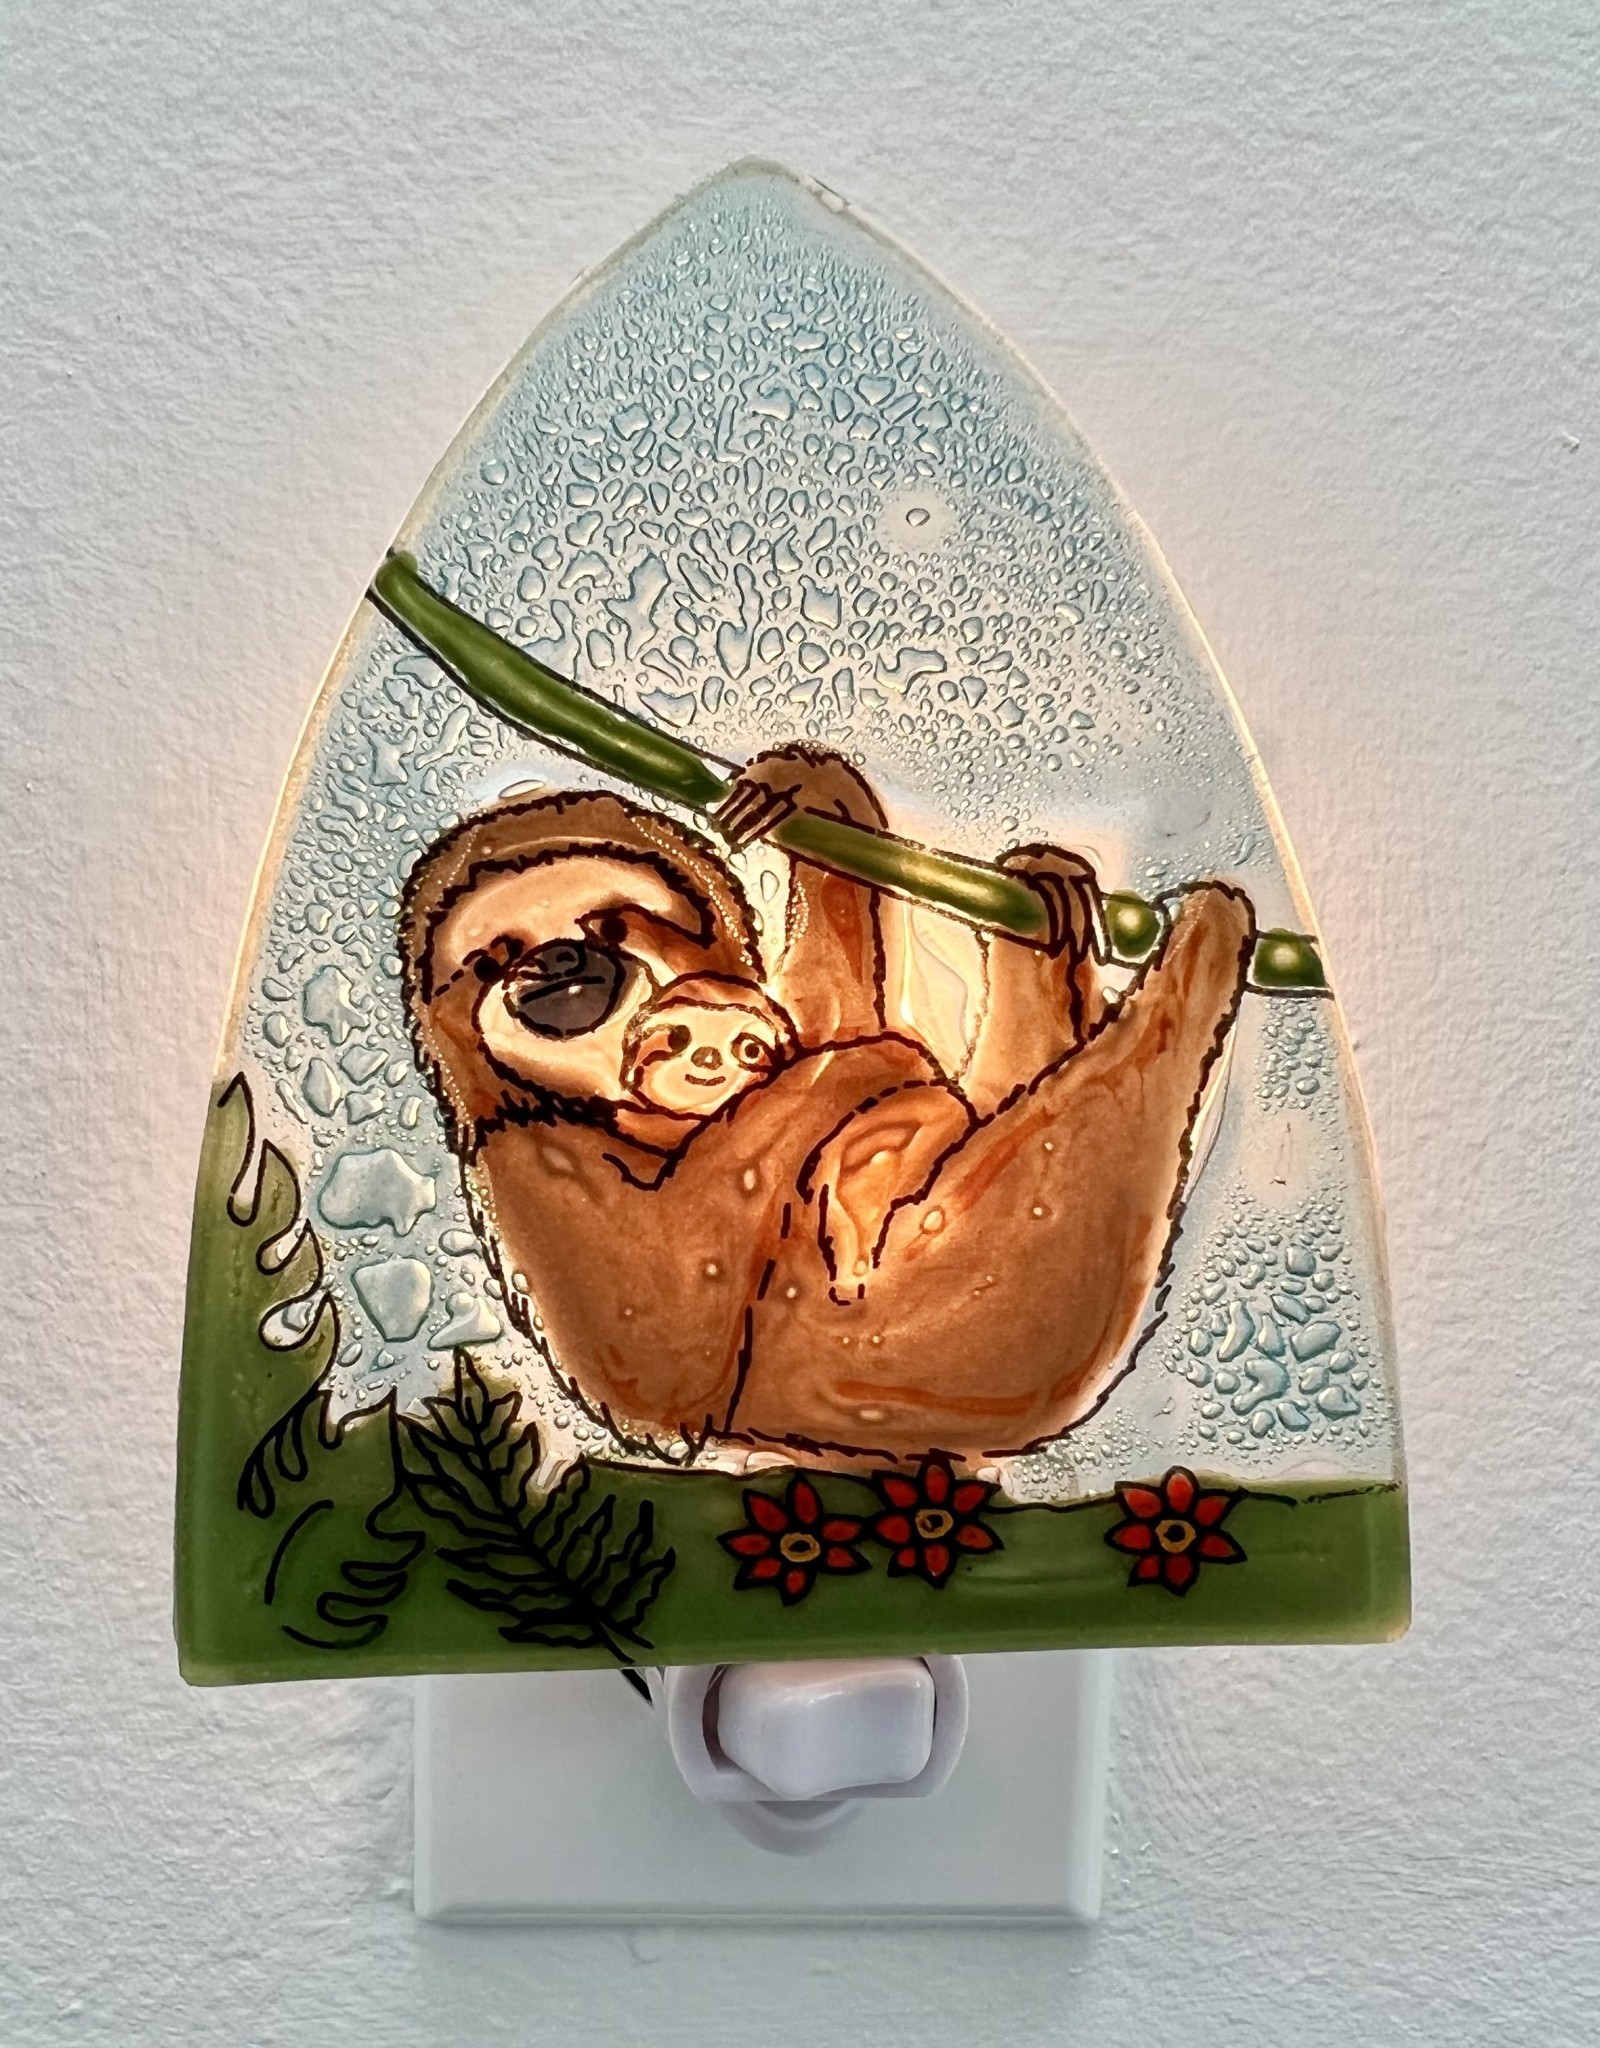 Pampeana Sloth Nightlight